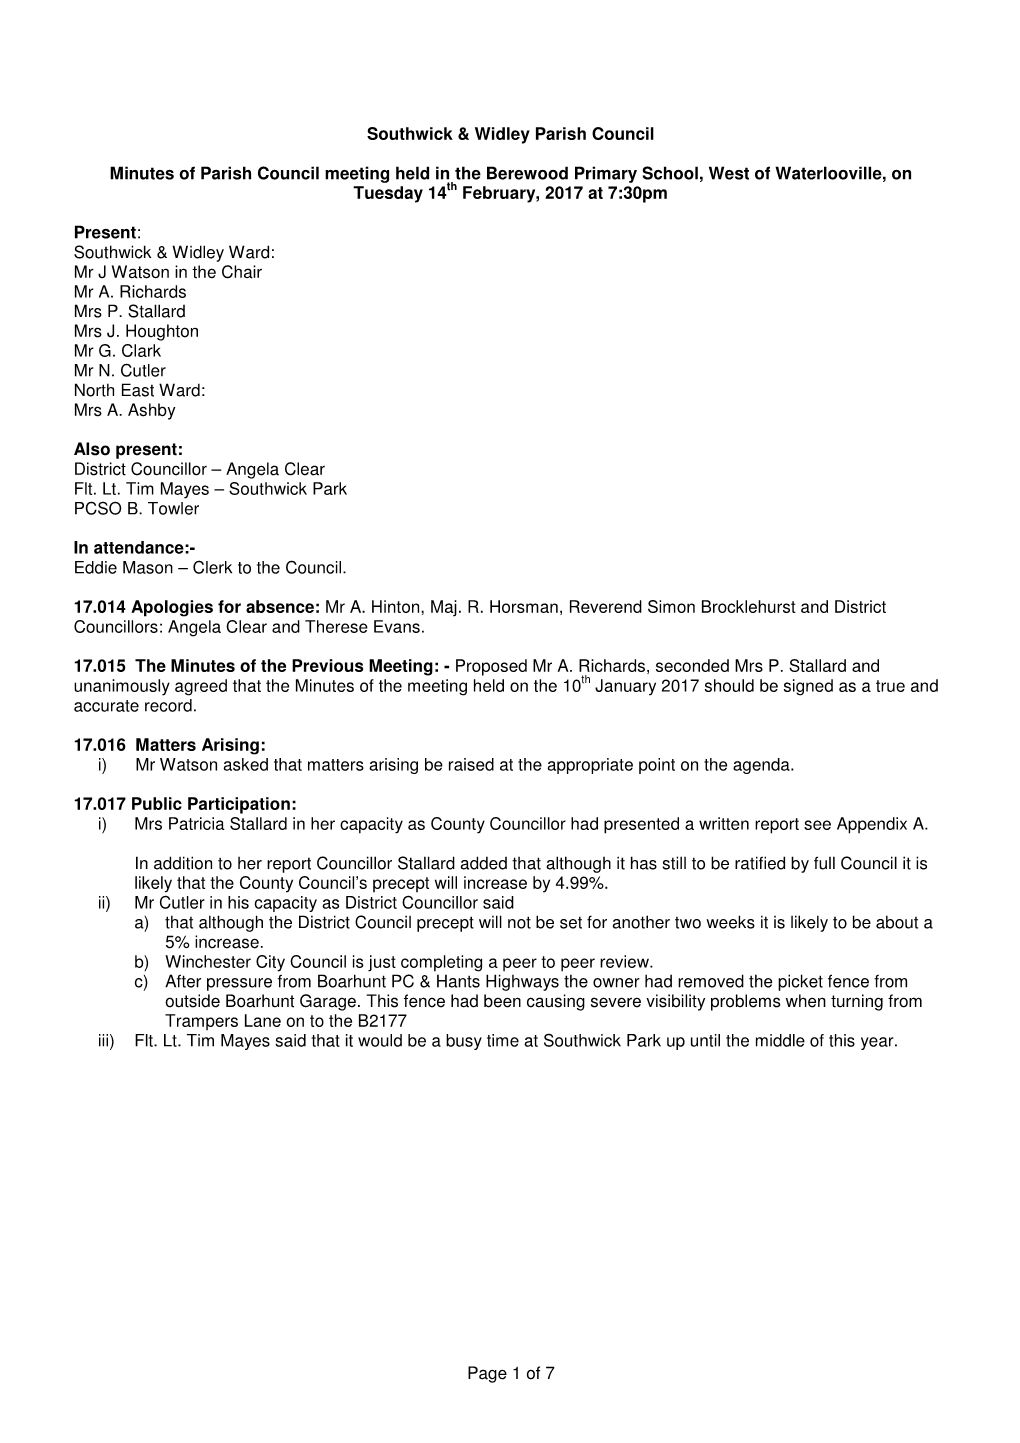 Page 1 of 7 Southwick & Widley Parish Council Minutes of Parish